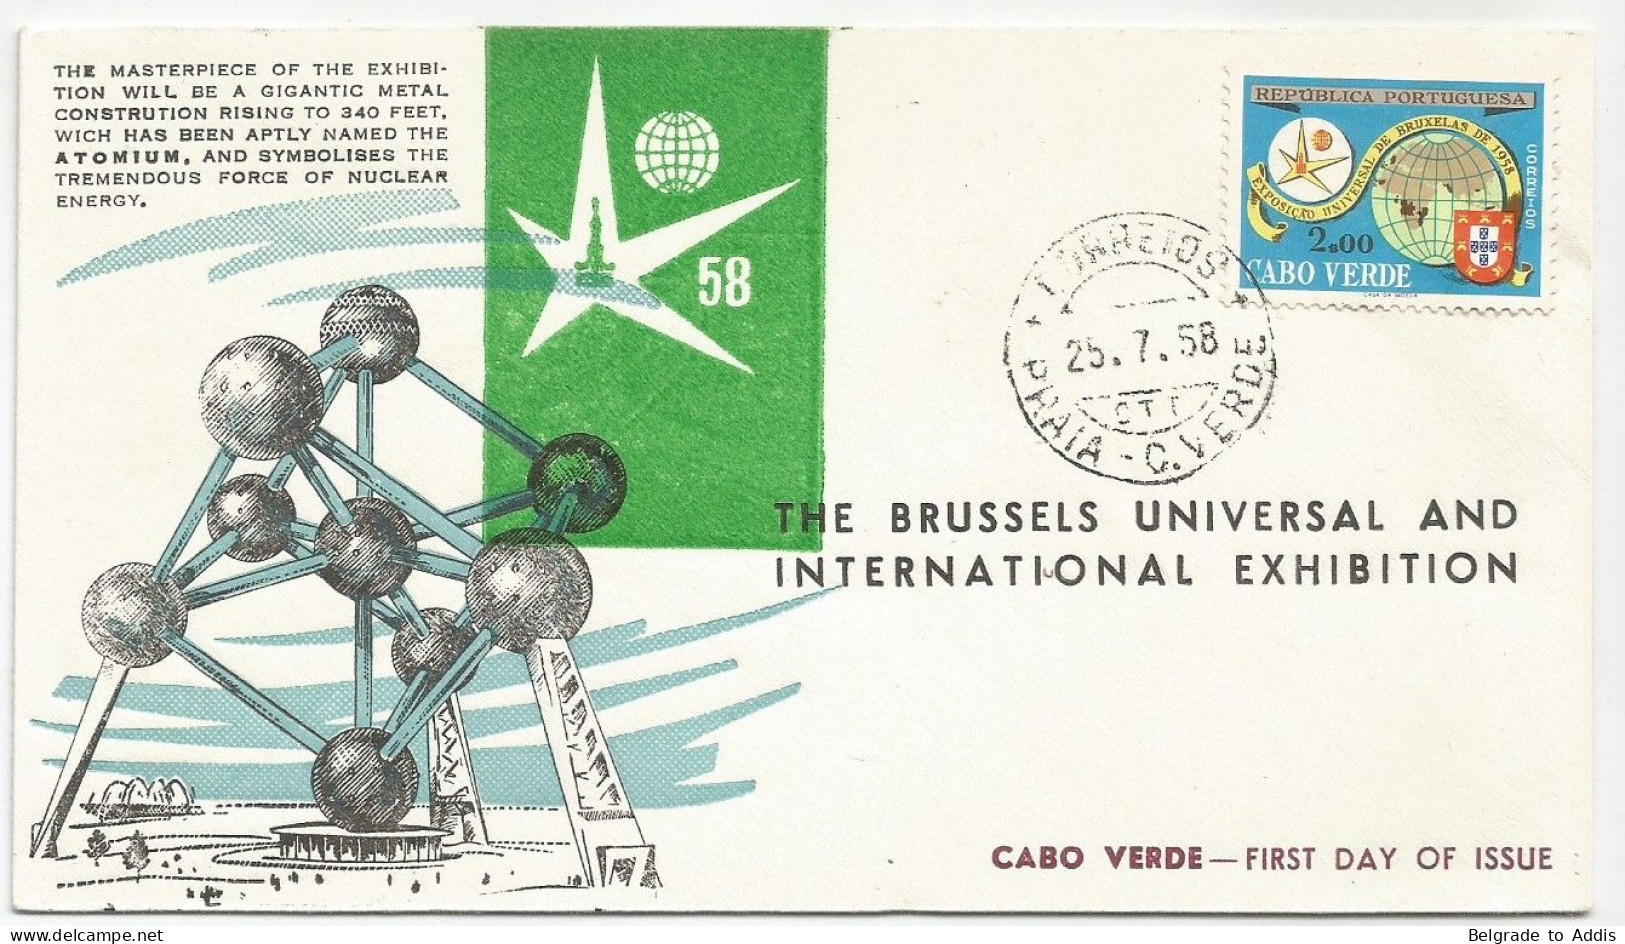 Cape Verde Cabo Verde Portugal Commemorative Cover & Cancel 1958 Brussels Universal Exhibition FDC - Cape Verde